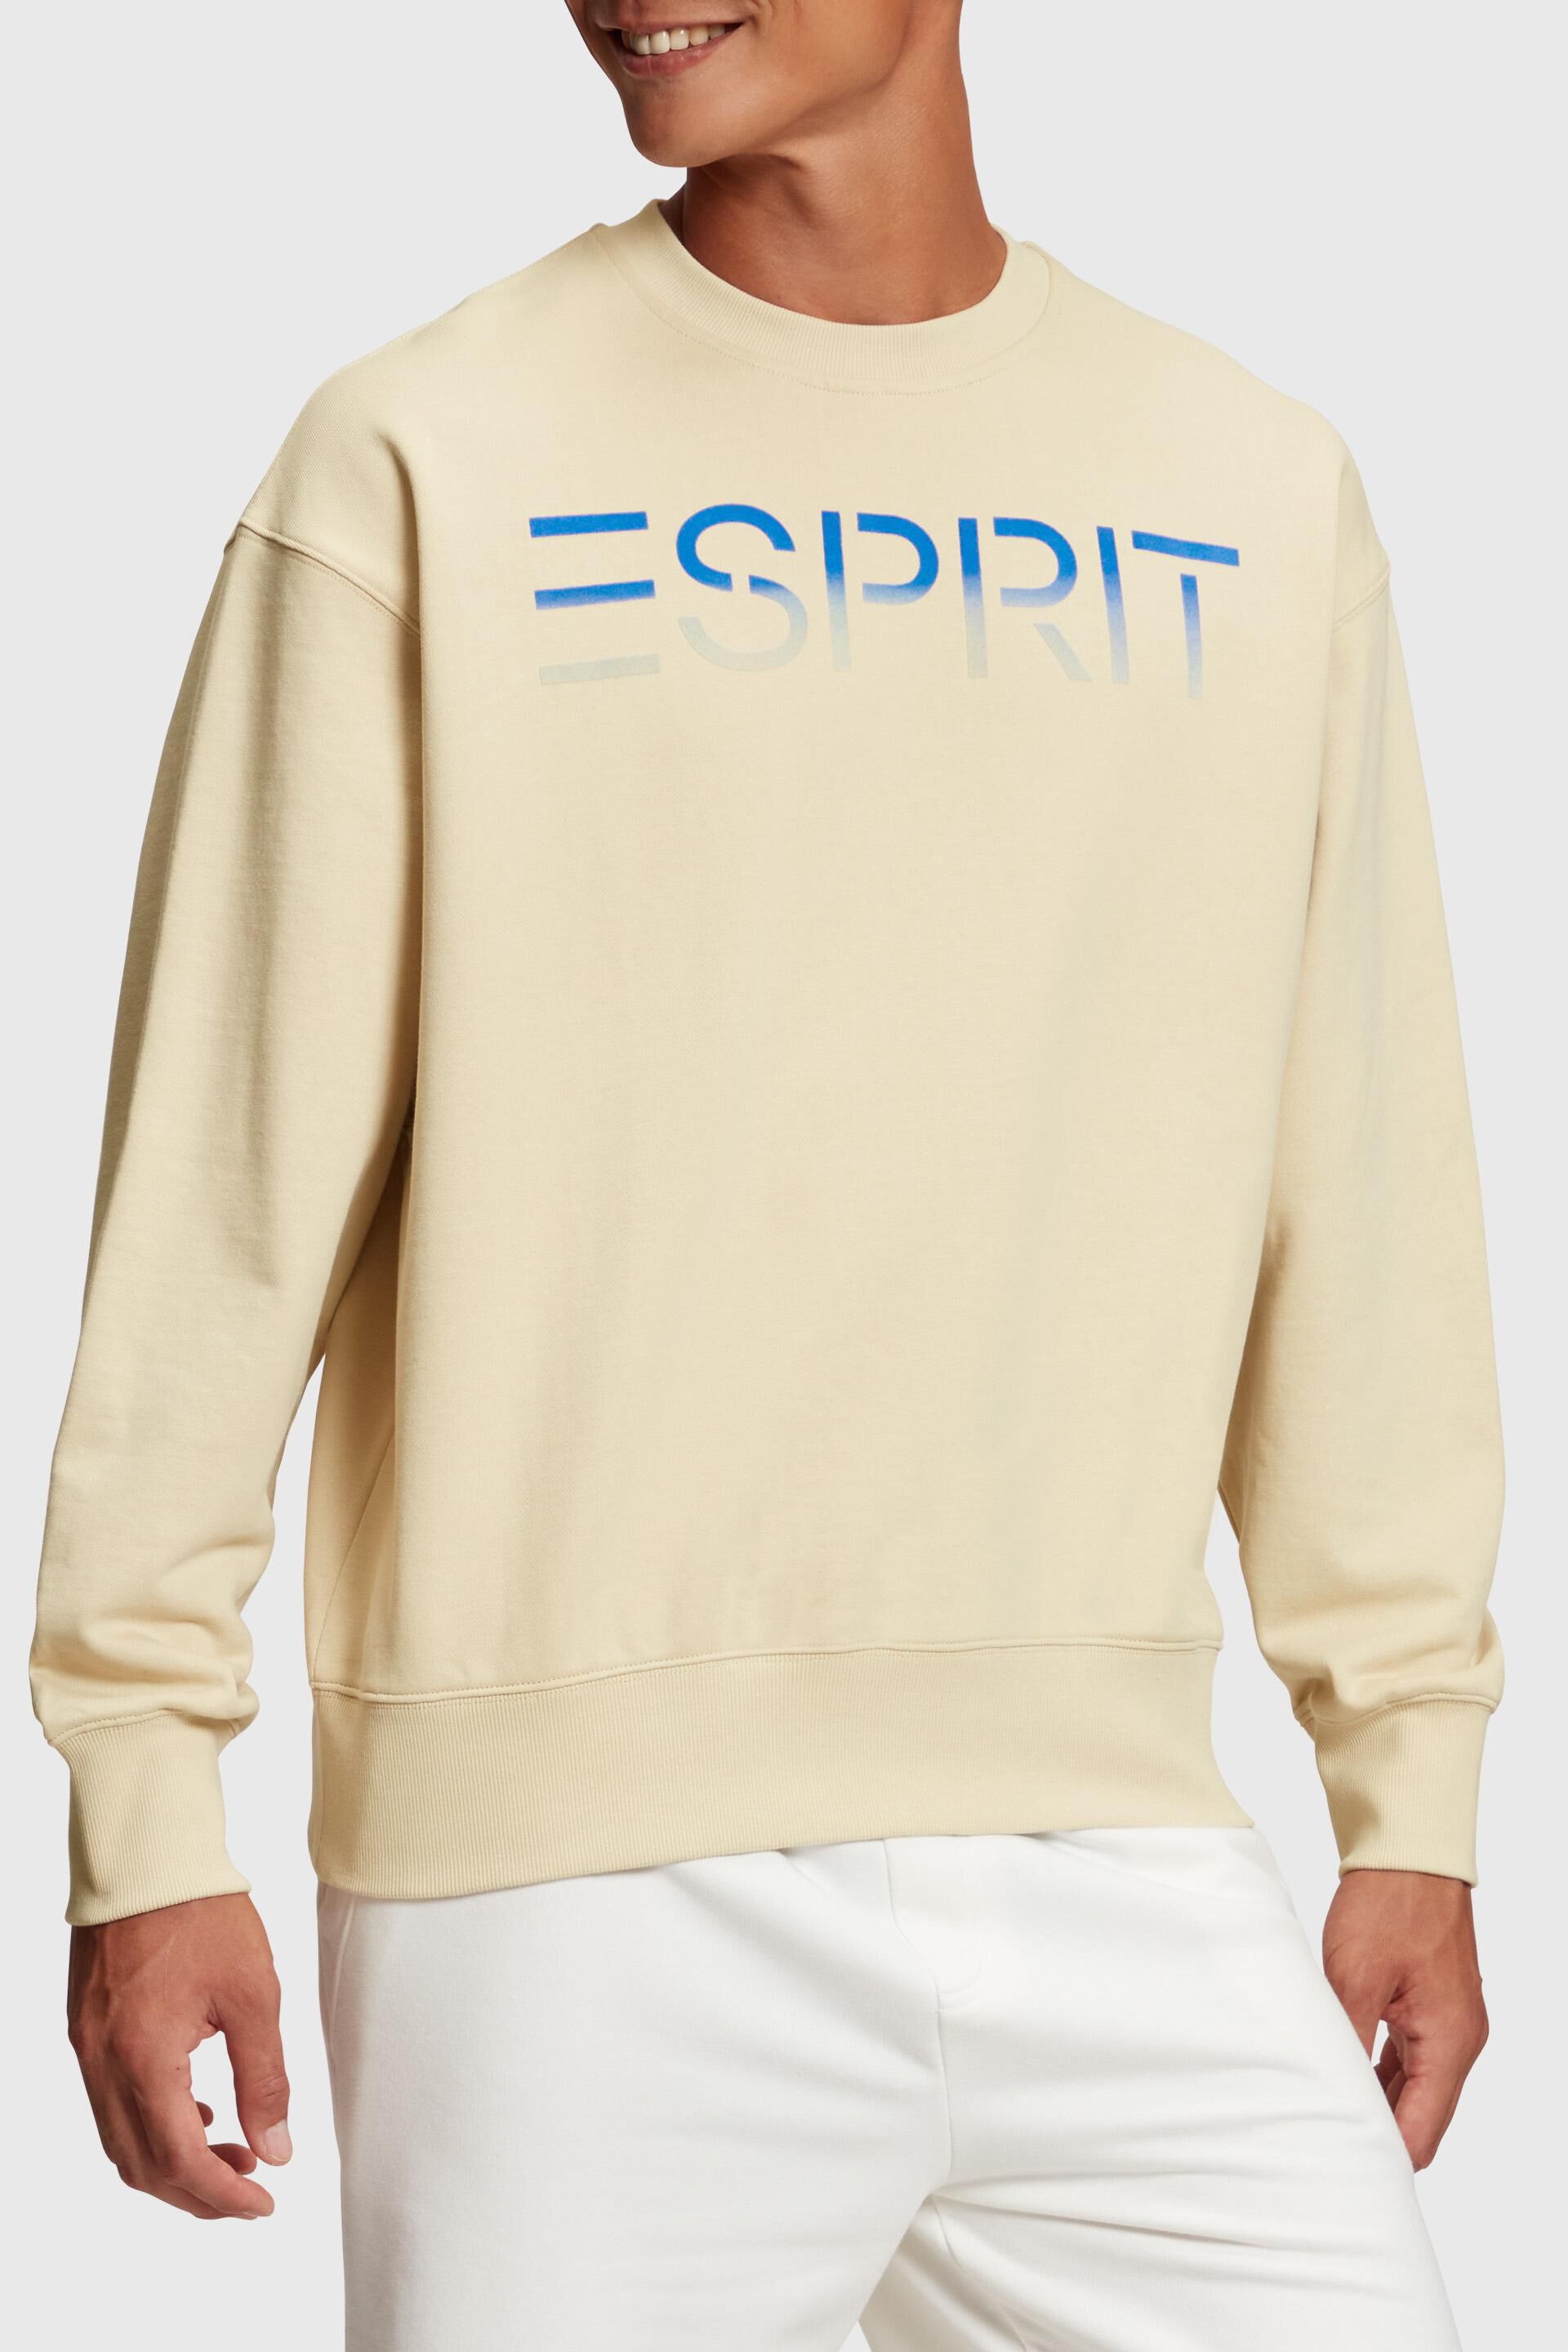 Esprit applique logo Flocked sweatshirt